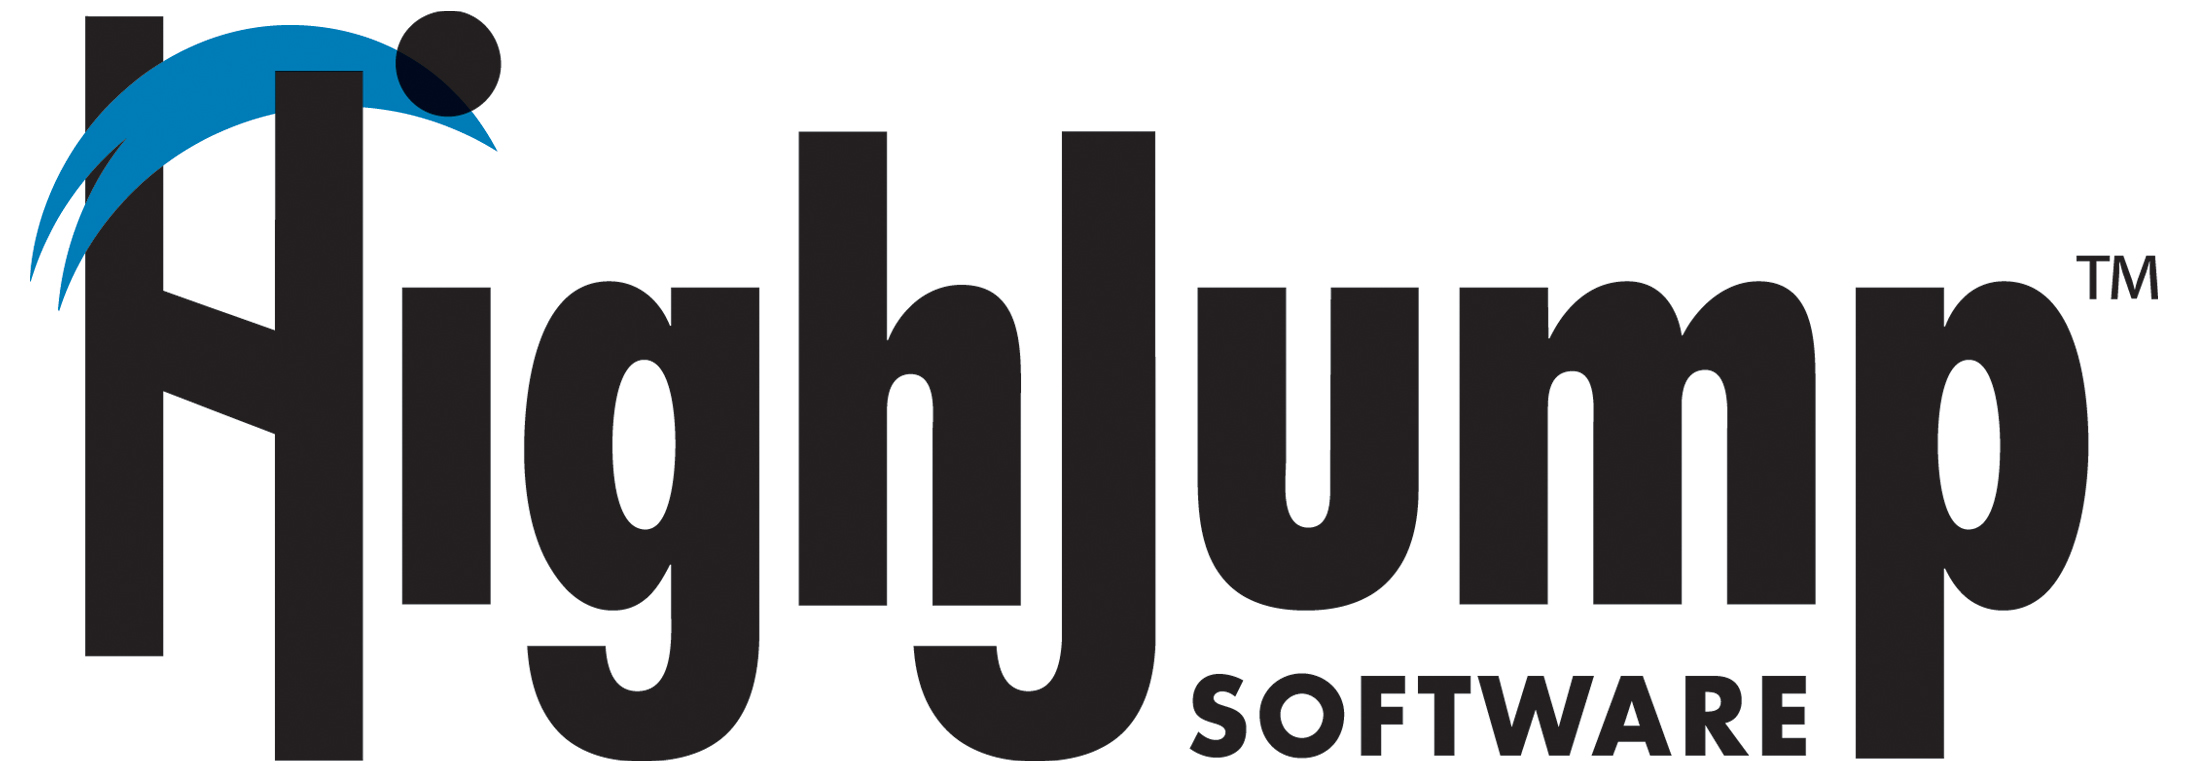 HighJump Software Logo photo - 1